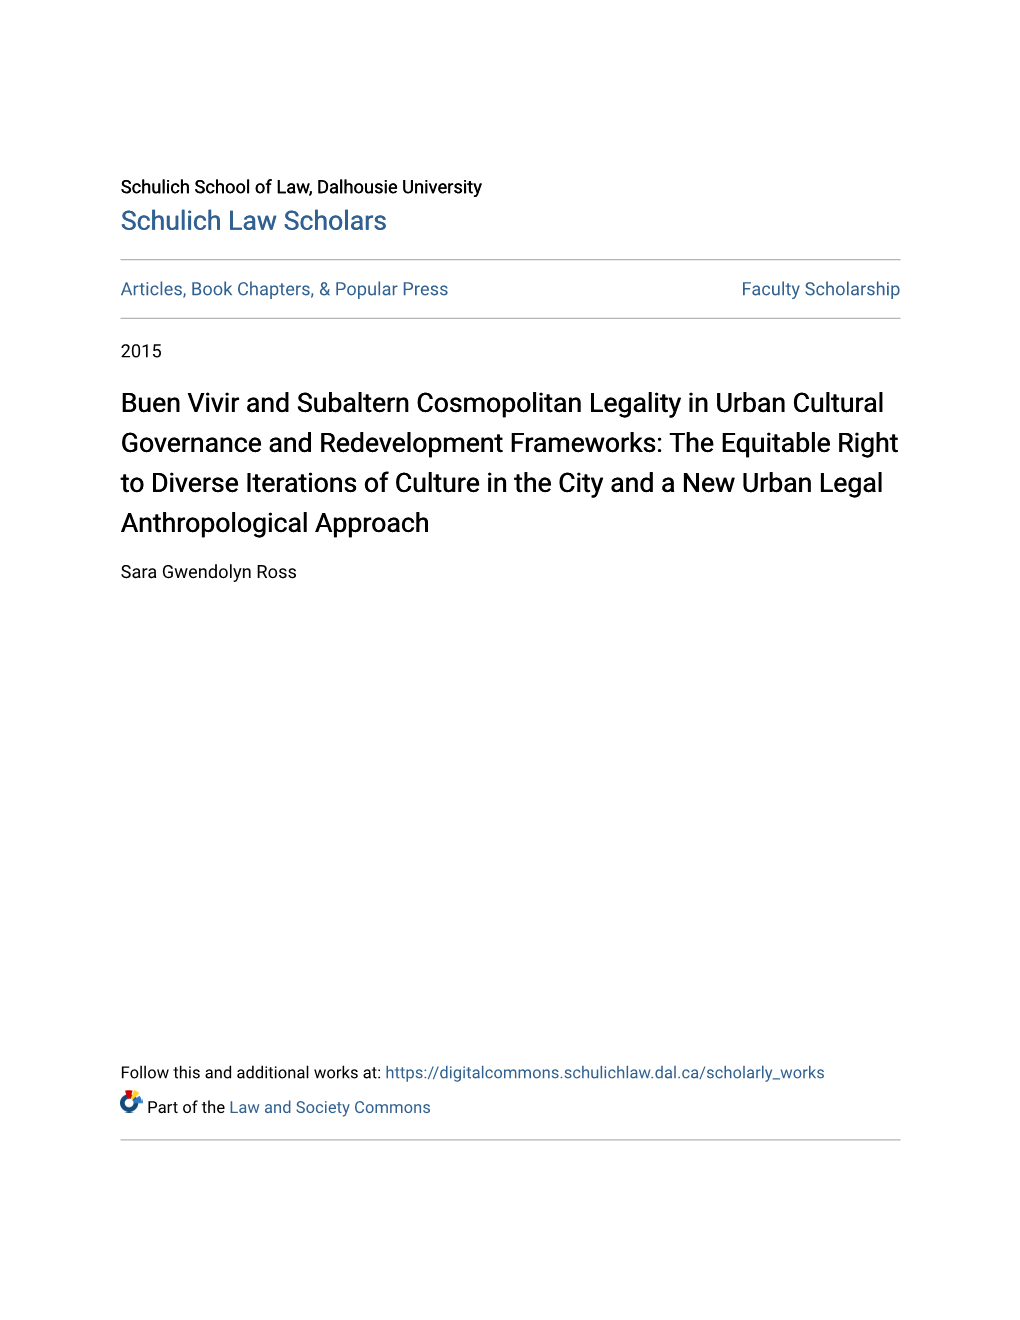 Buen Vivir and Subaltern Cosmopolitan Legality in Urban Cultural Governance and Redevelopment Frameworks